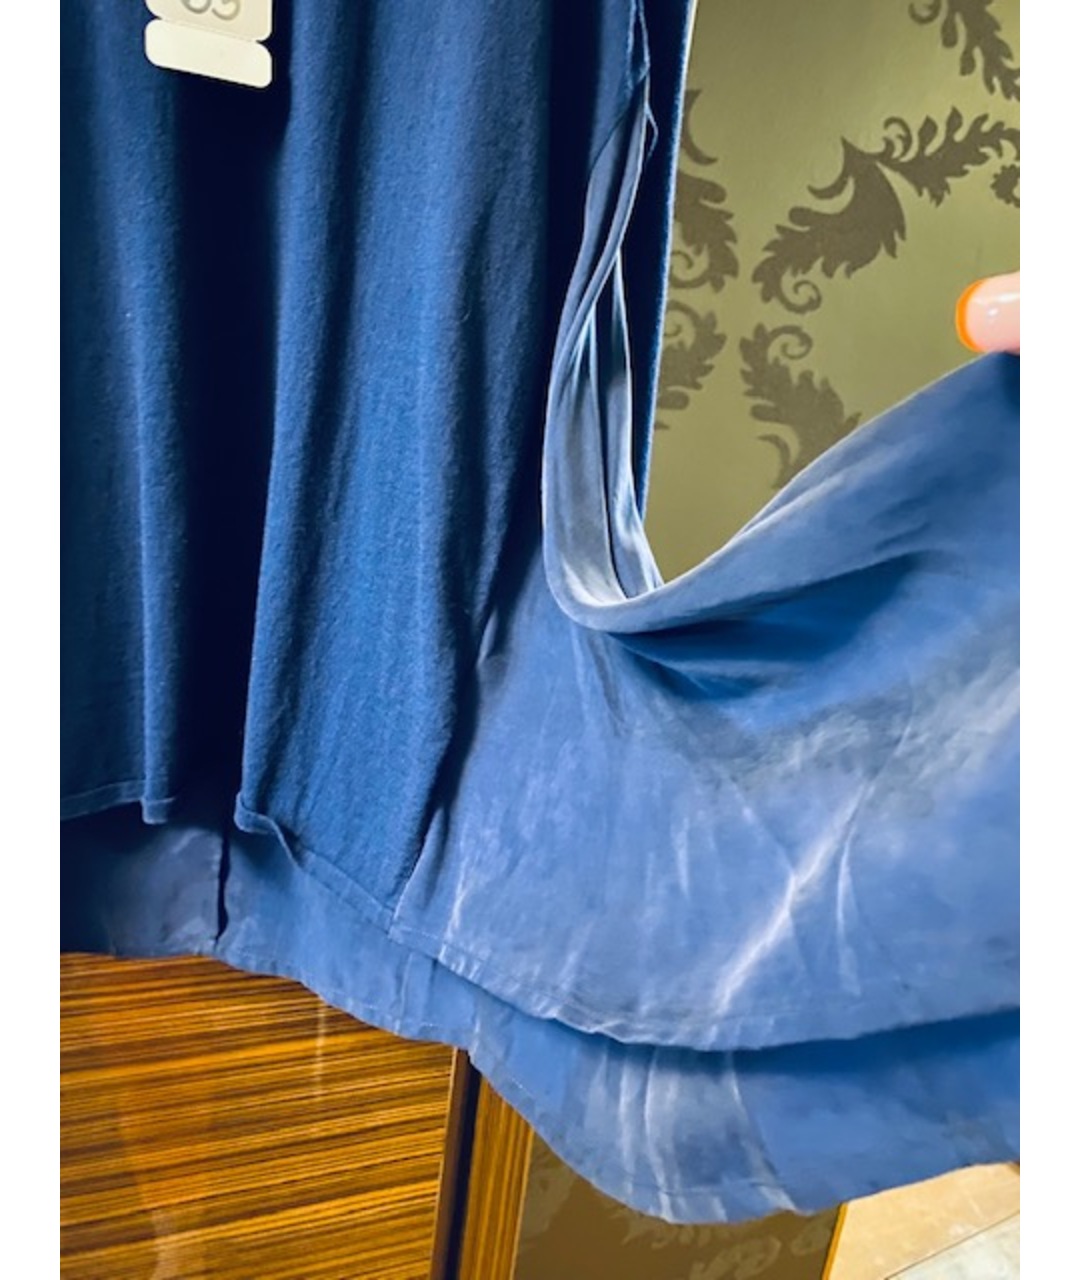 ESCADA Синий шерстяной костюм с брюками, фото 6